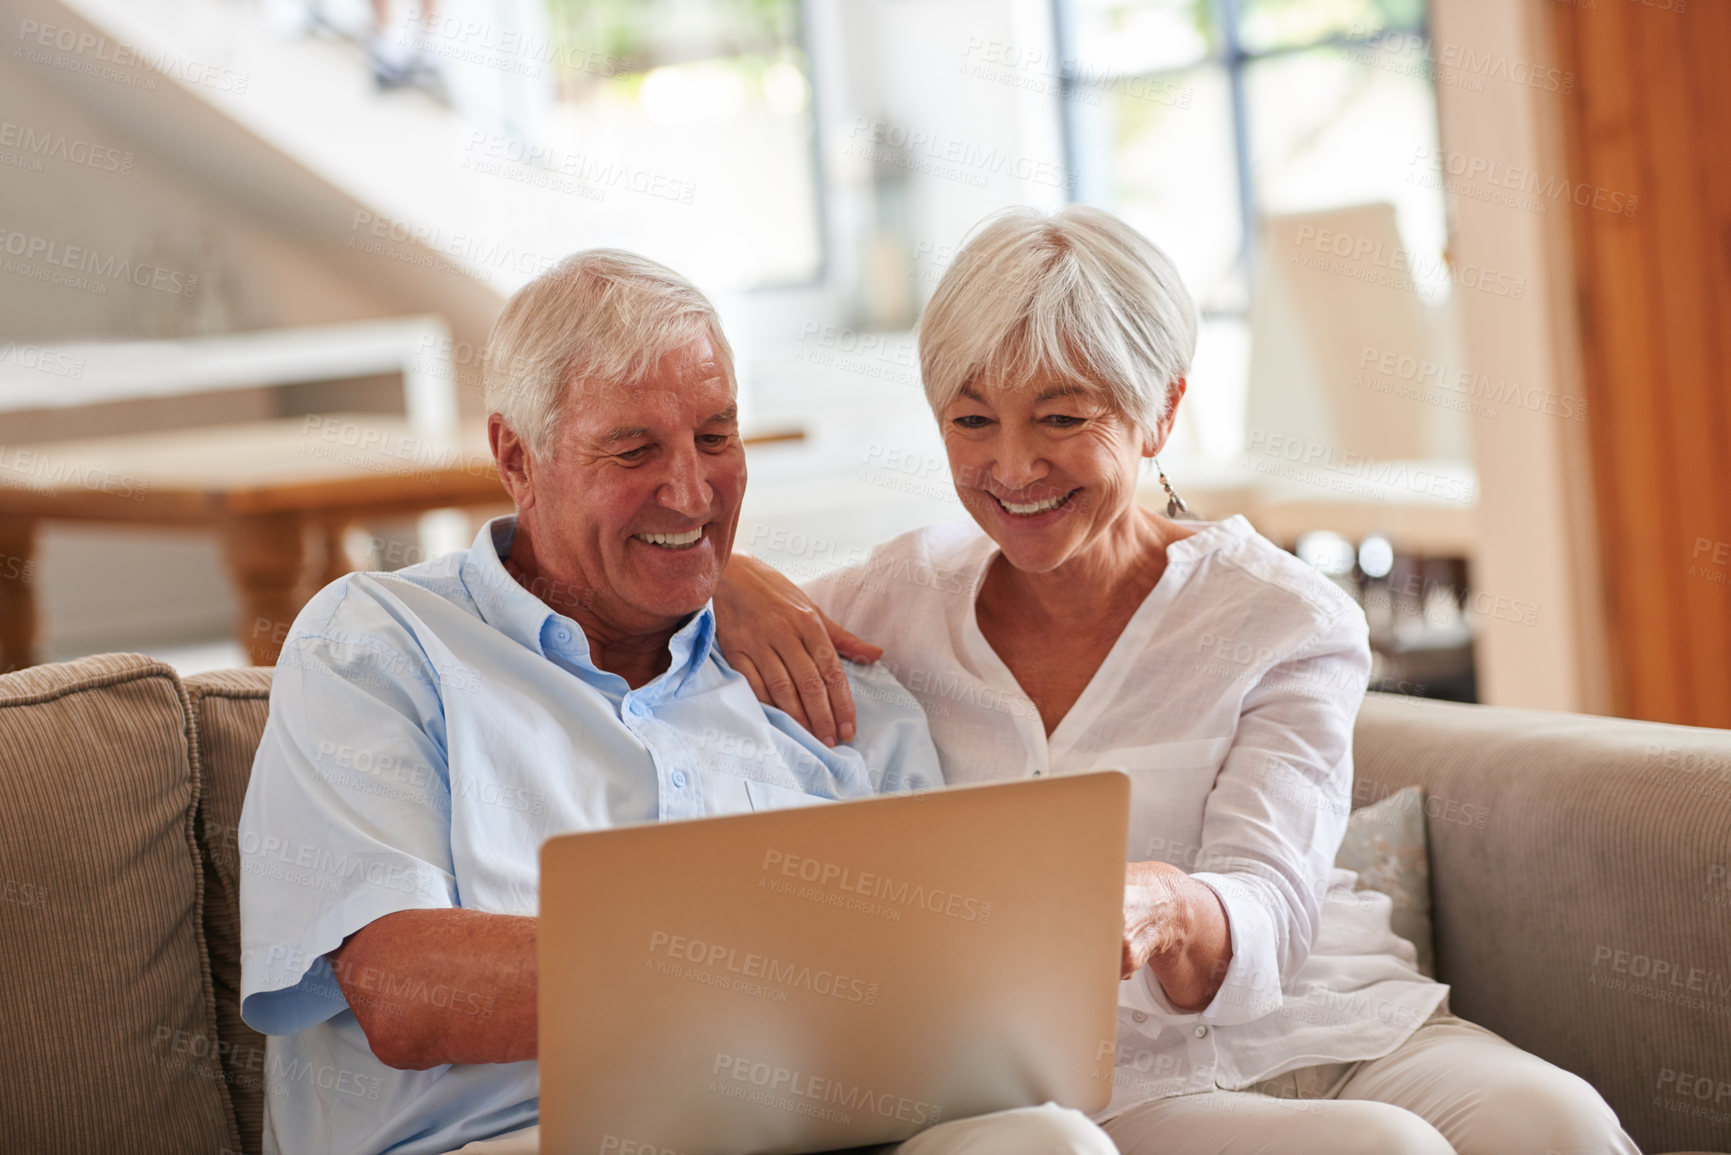 Orlando Asian Seniors Online Dating Service